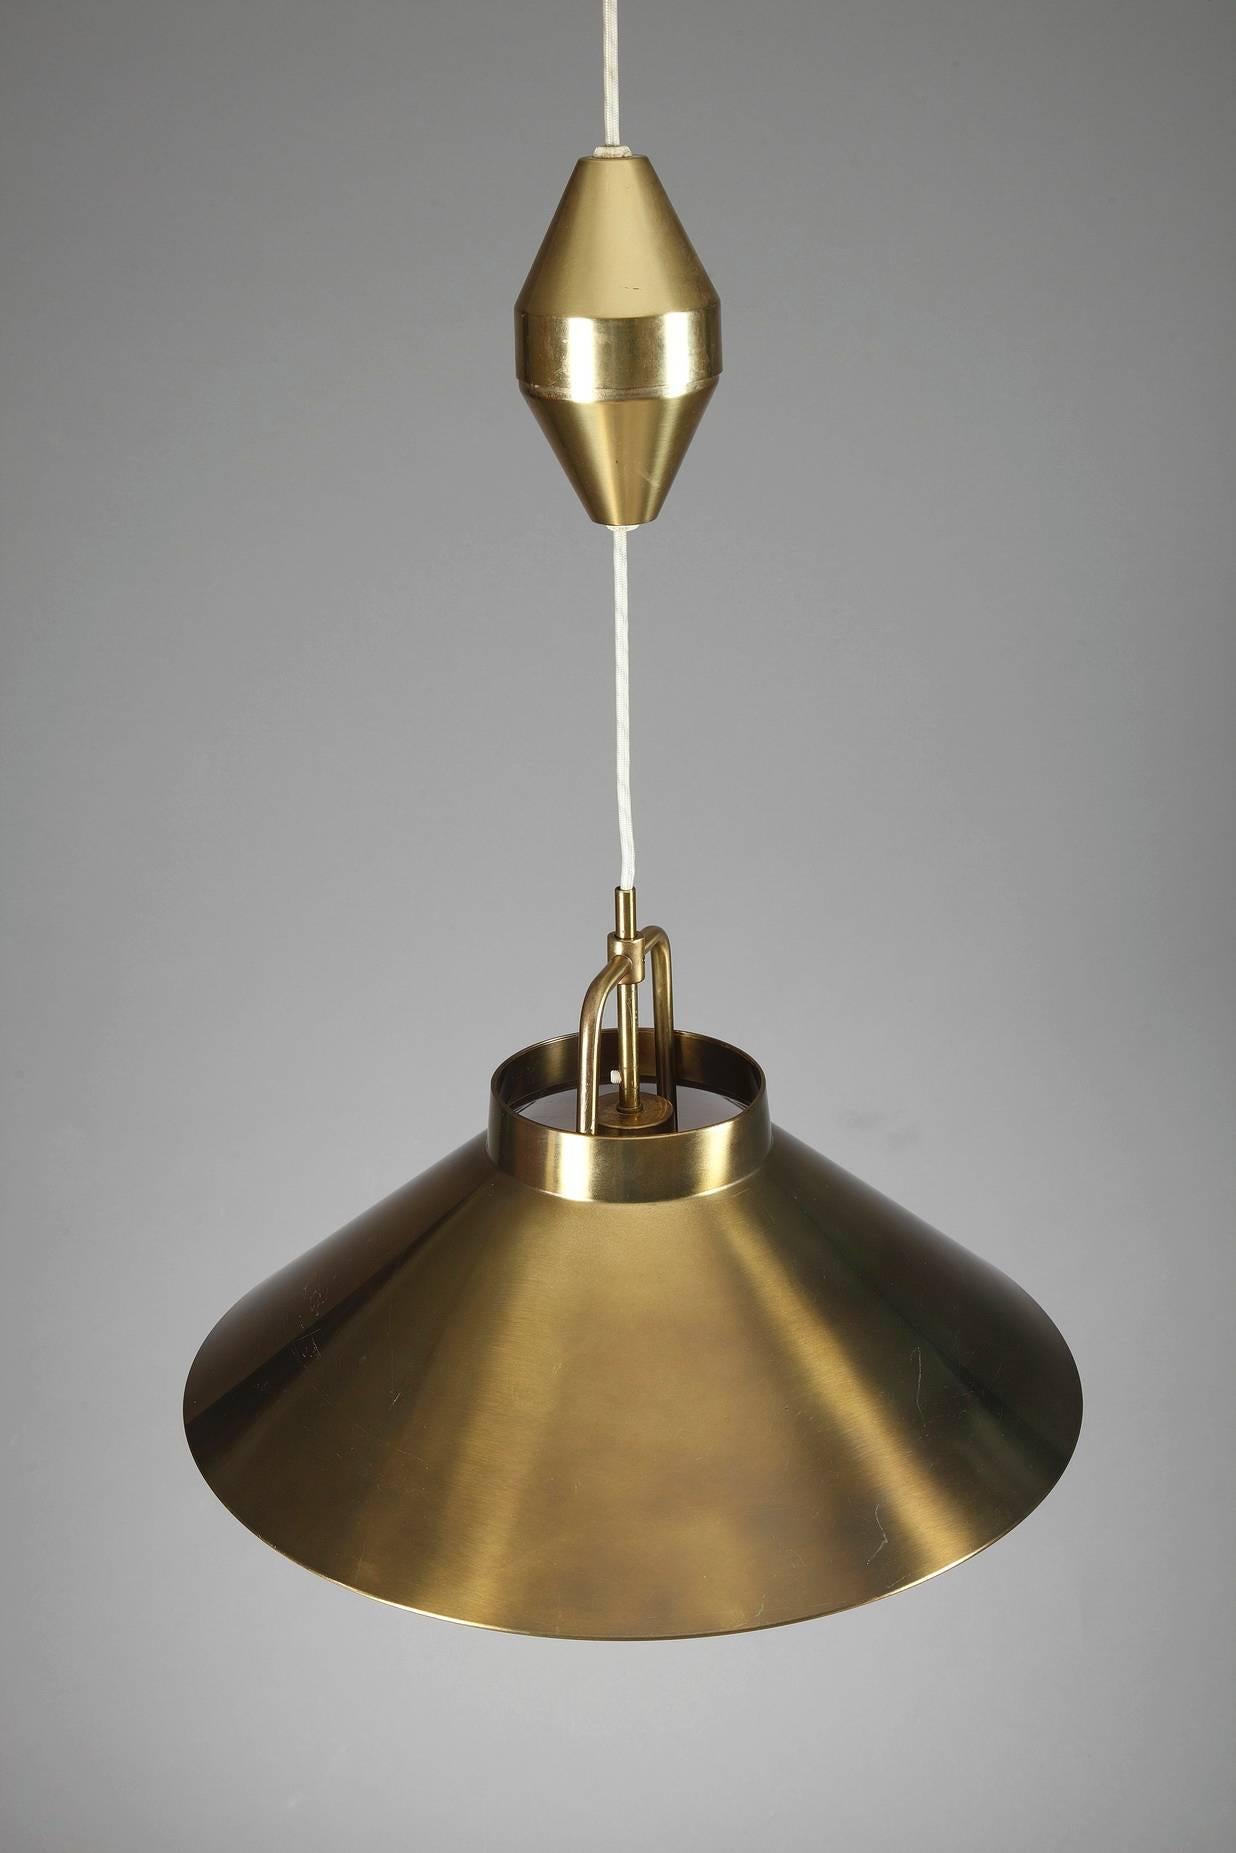 Mid-Century Modern 20th Century Brass Pendant With Adjustable Height Mechanism